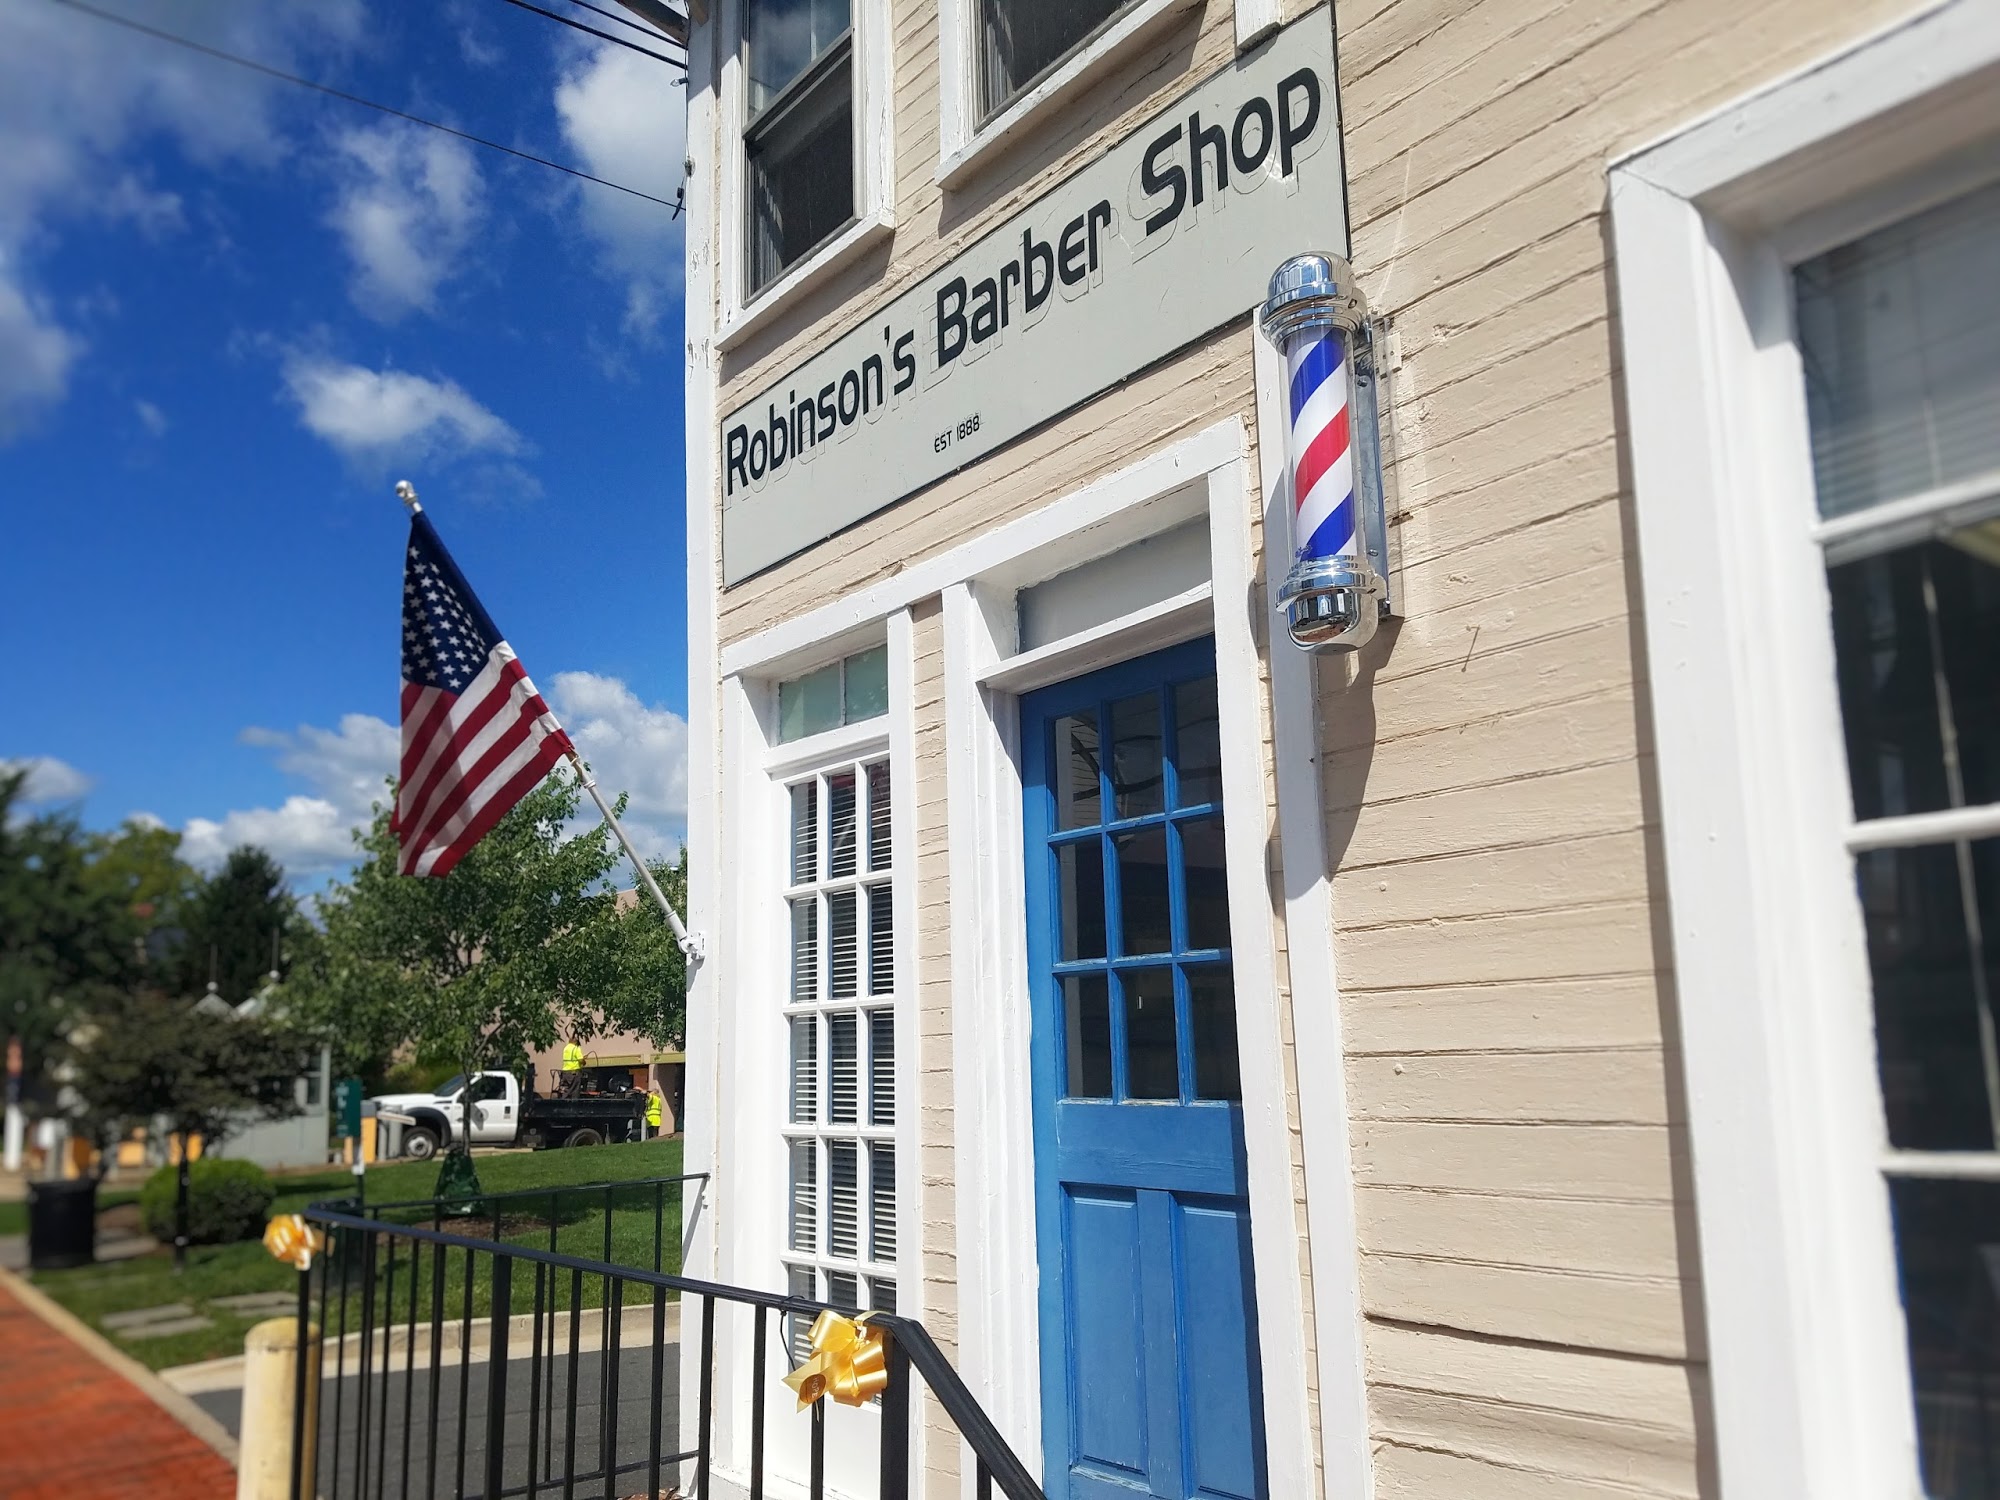 Robinson's Barber Shop